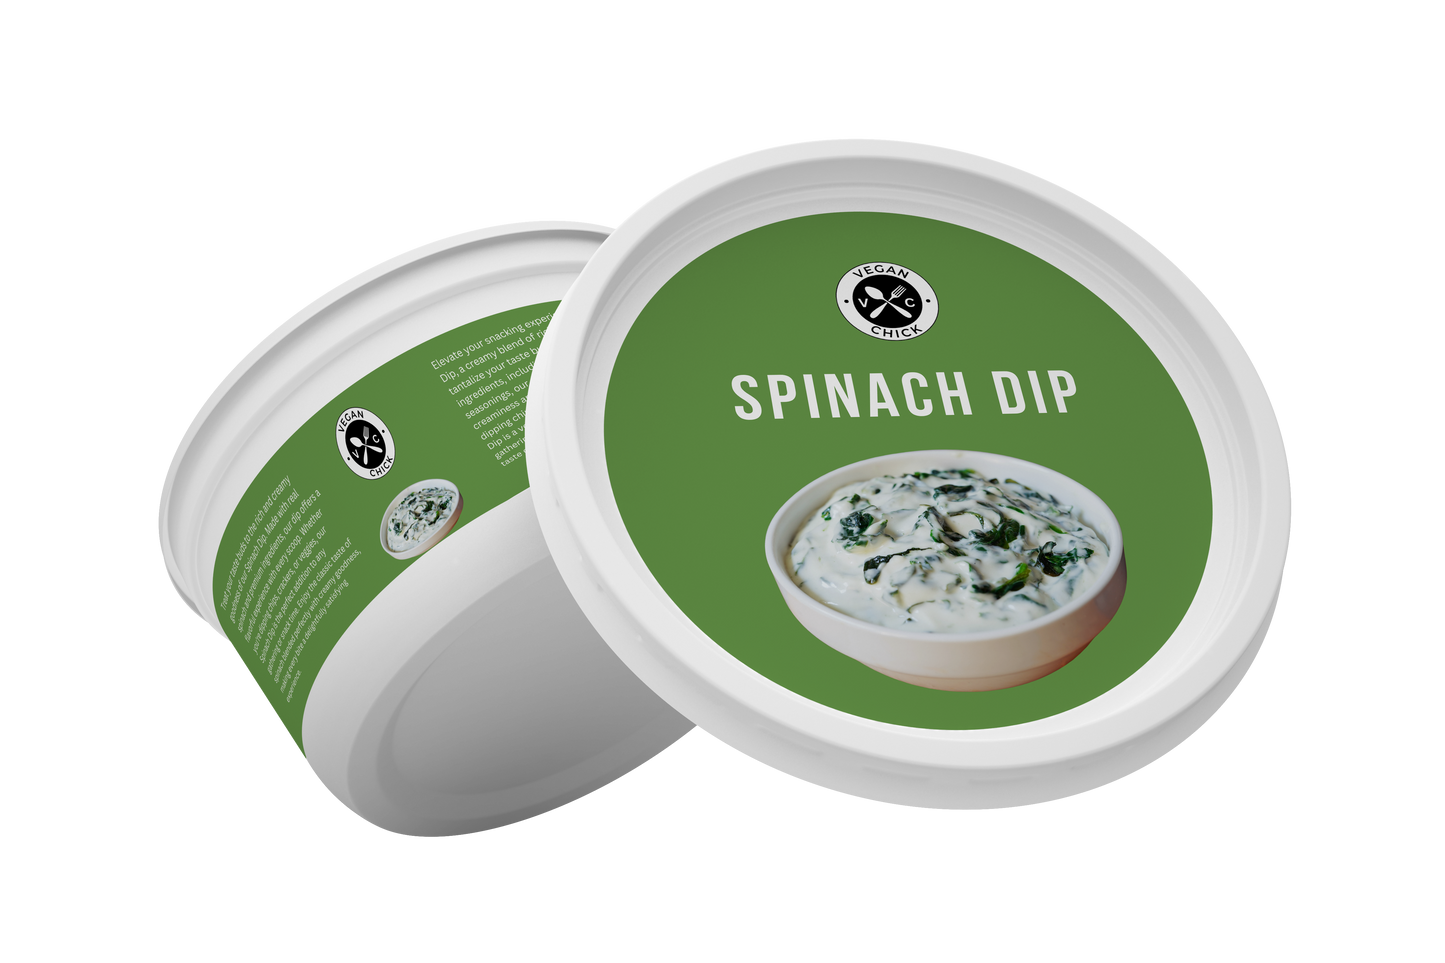 Creamy Spinach Dip